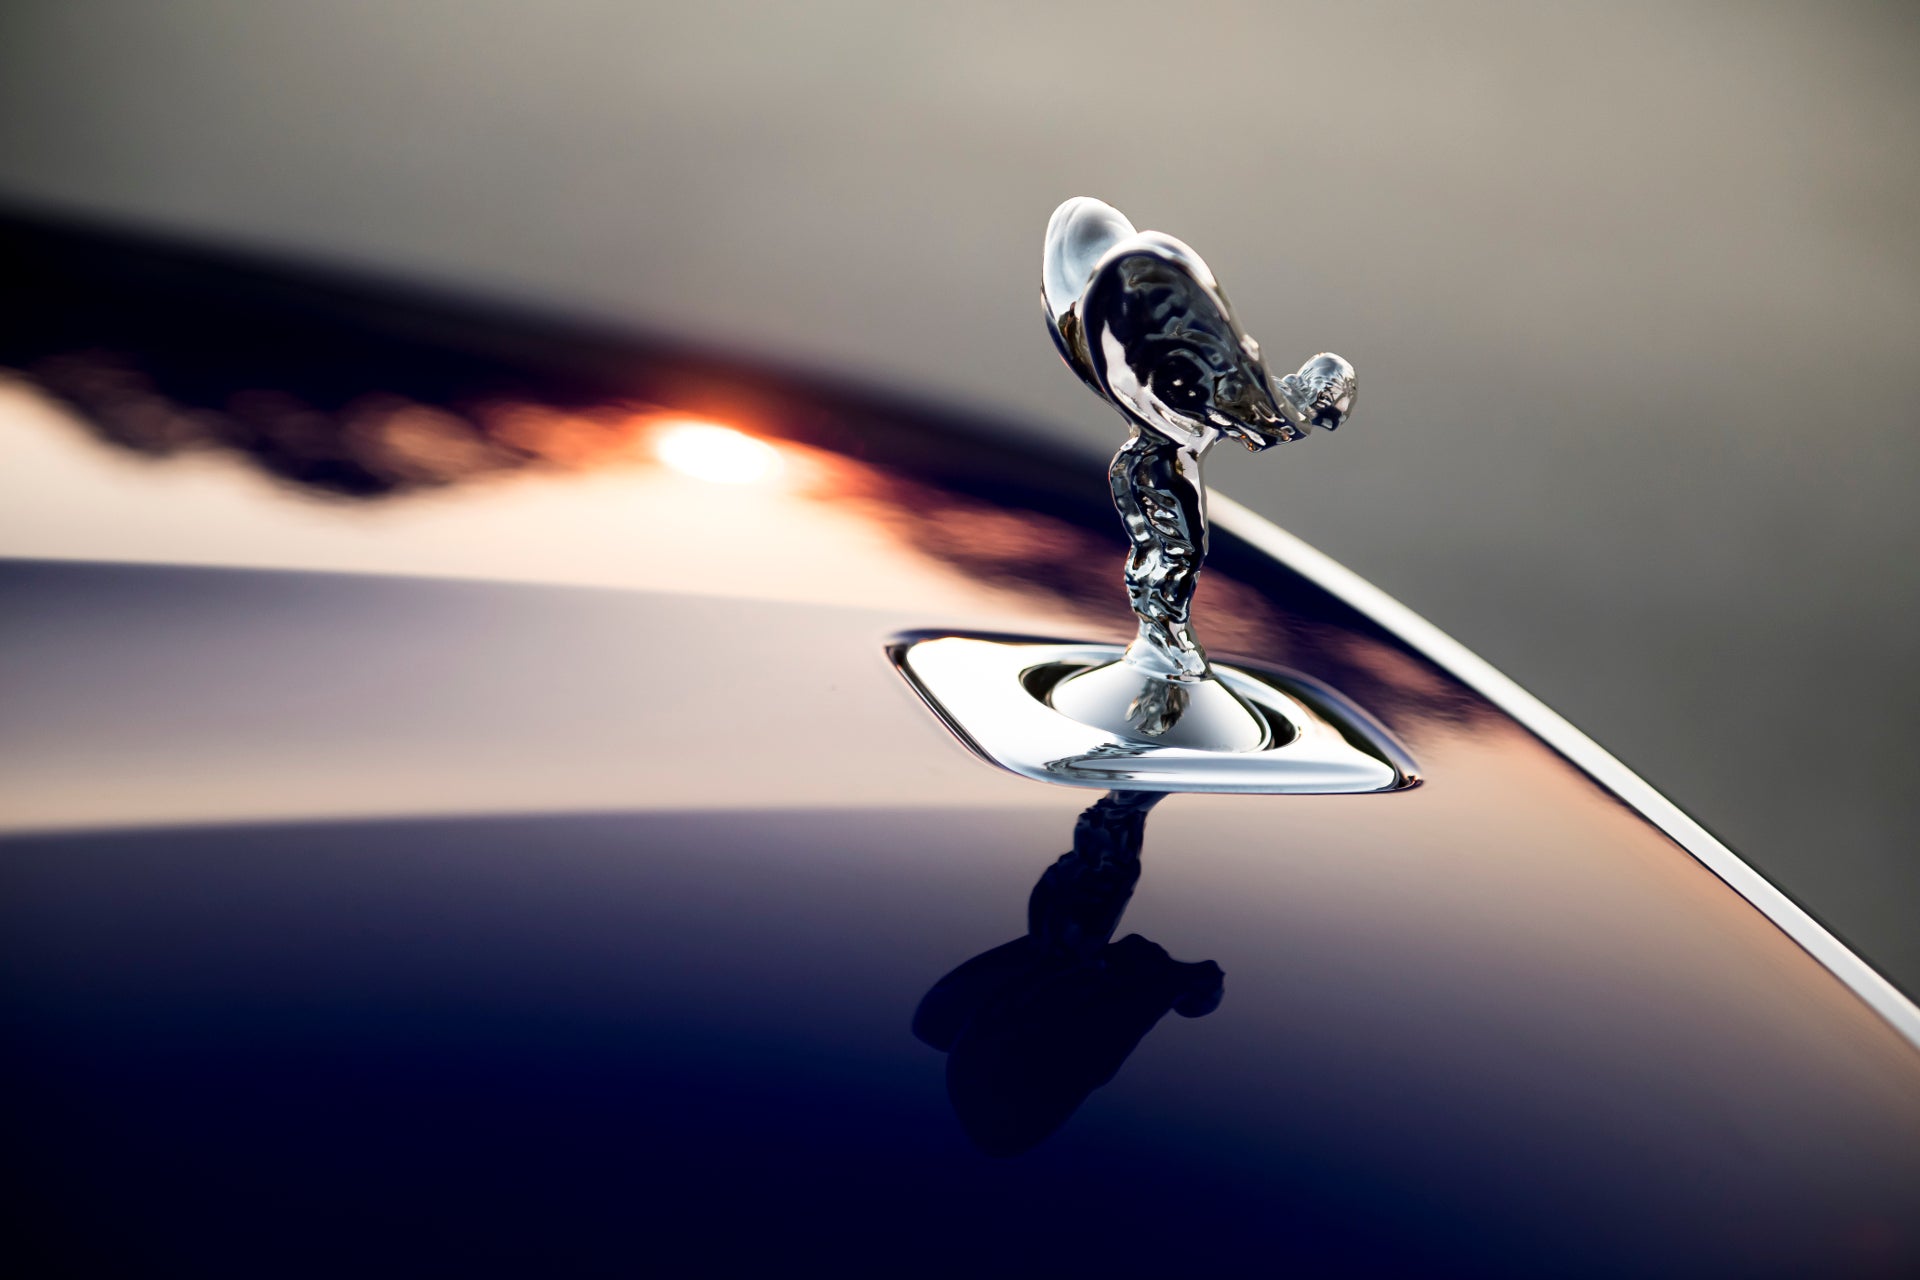 James Lipman/Rolls-Royce